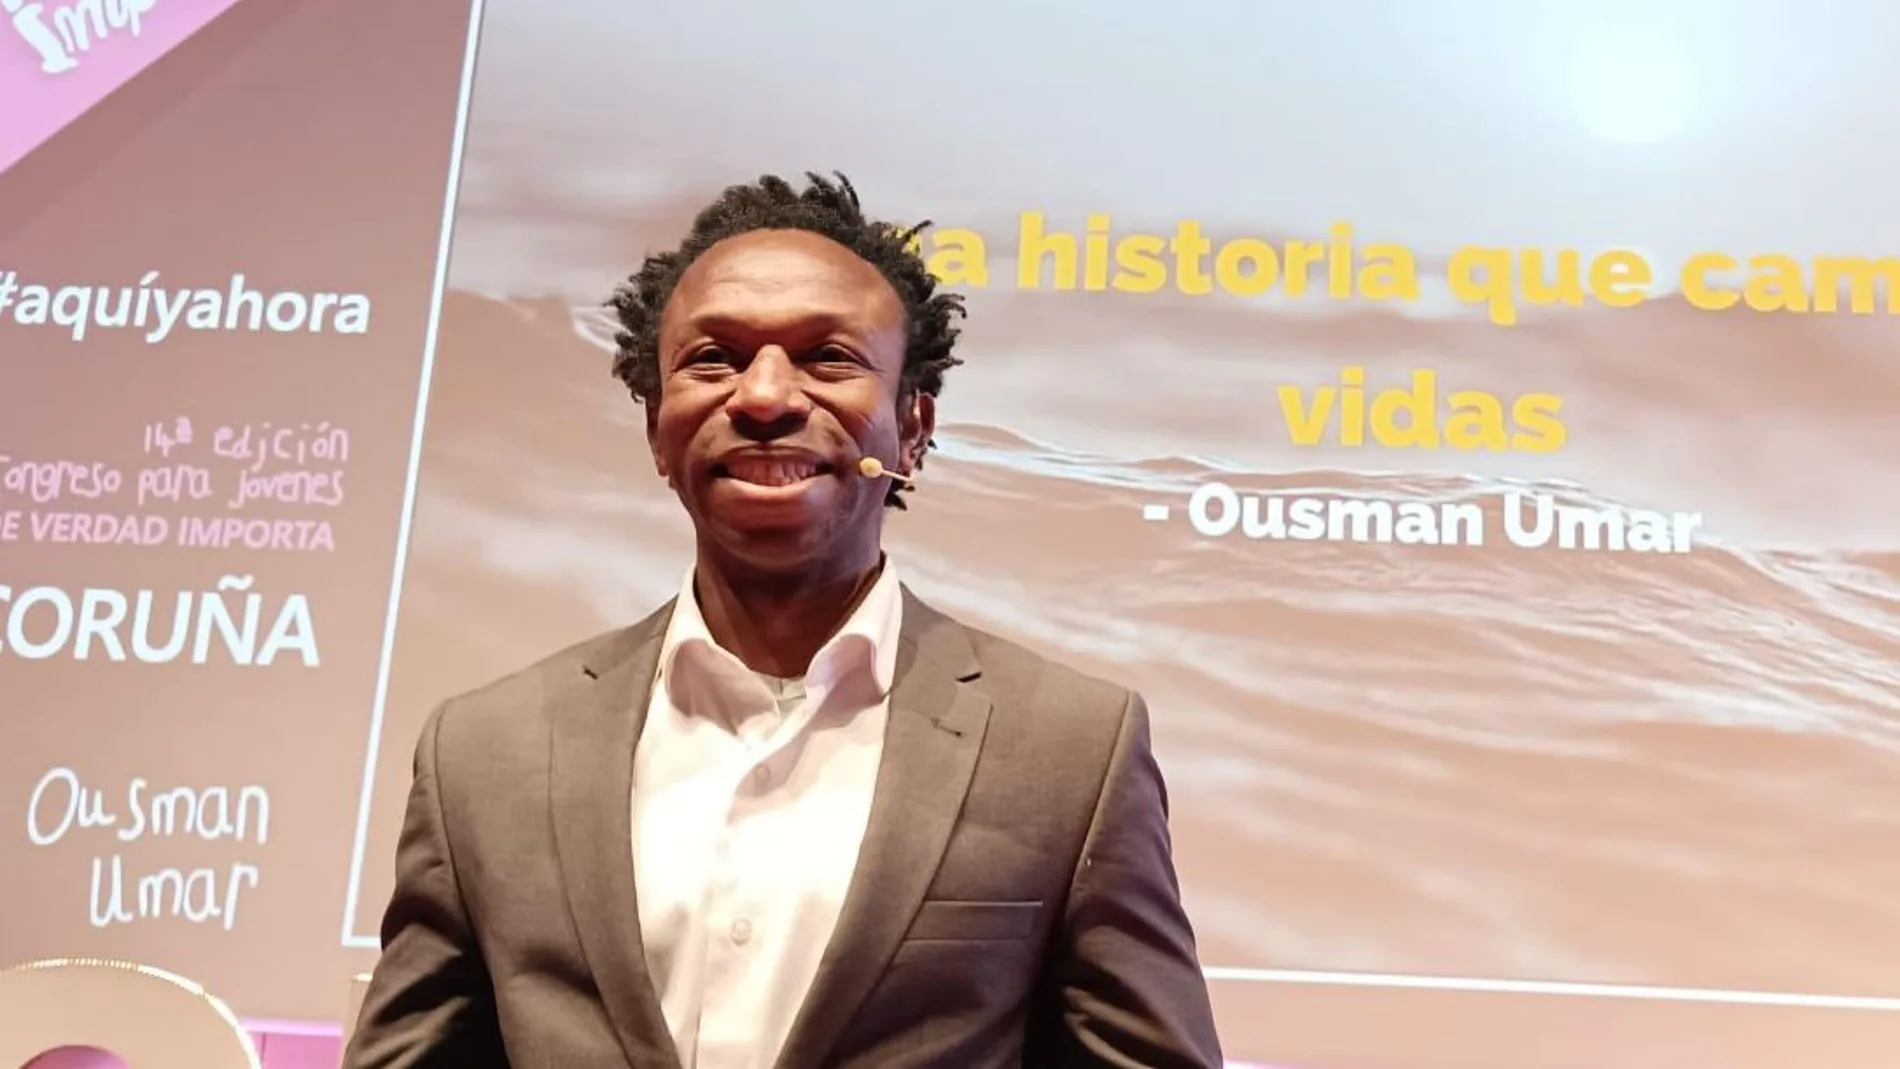 Ousman Umar